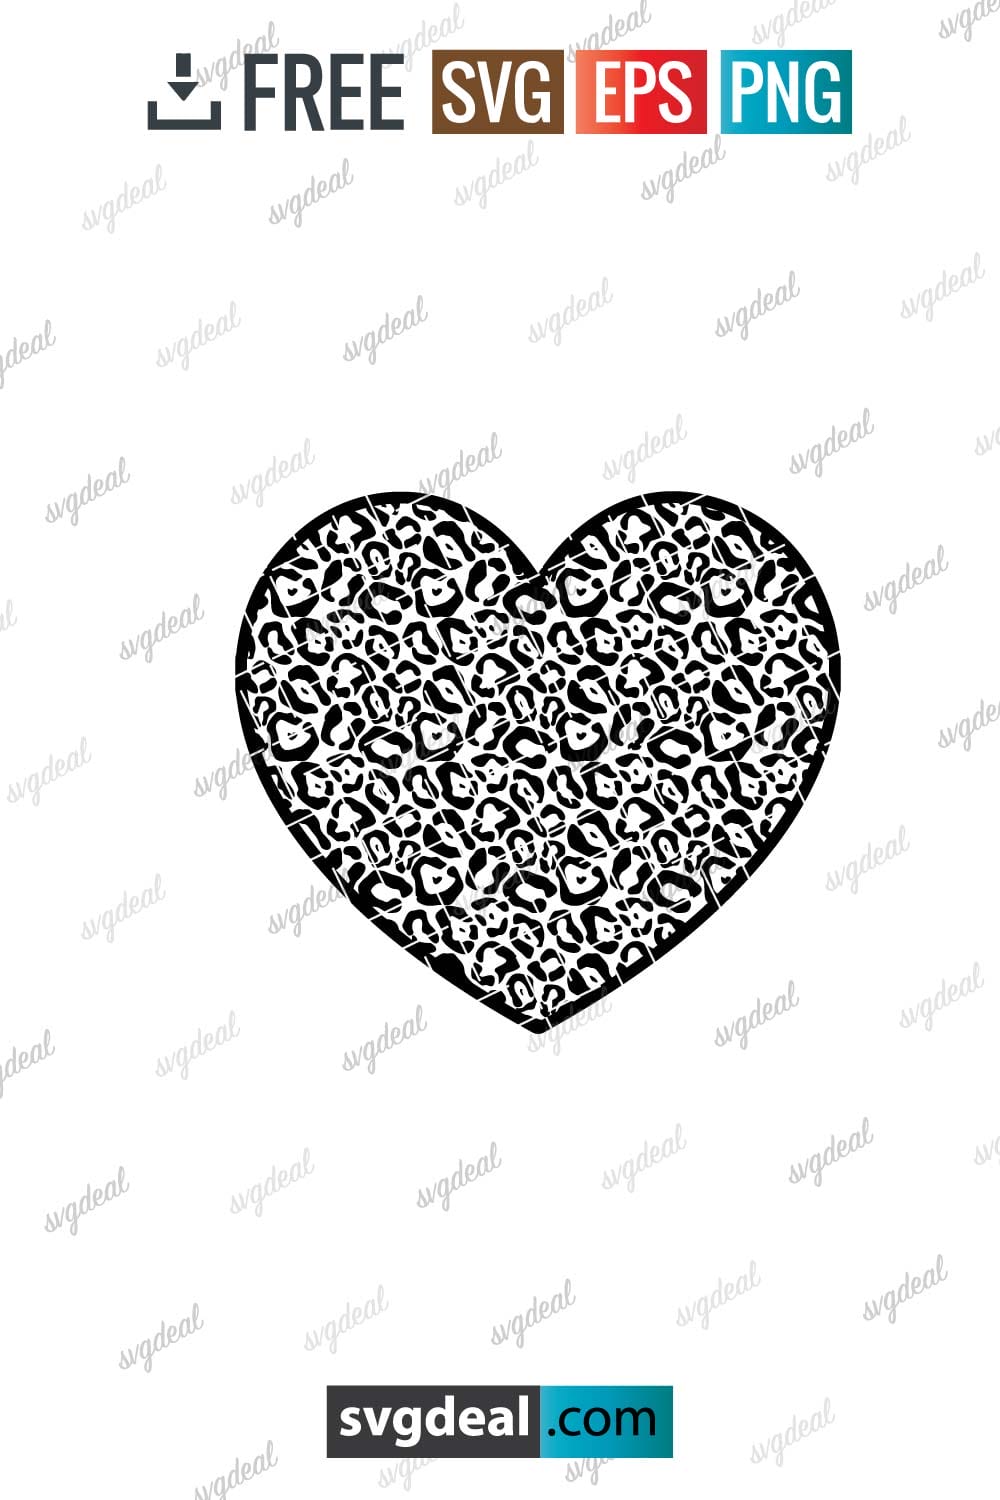 Leopard heart SVG & PNG 1